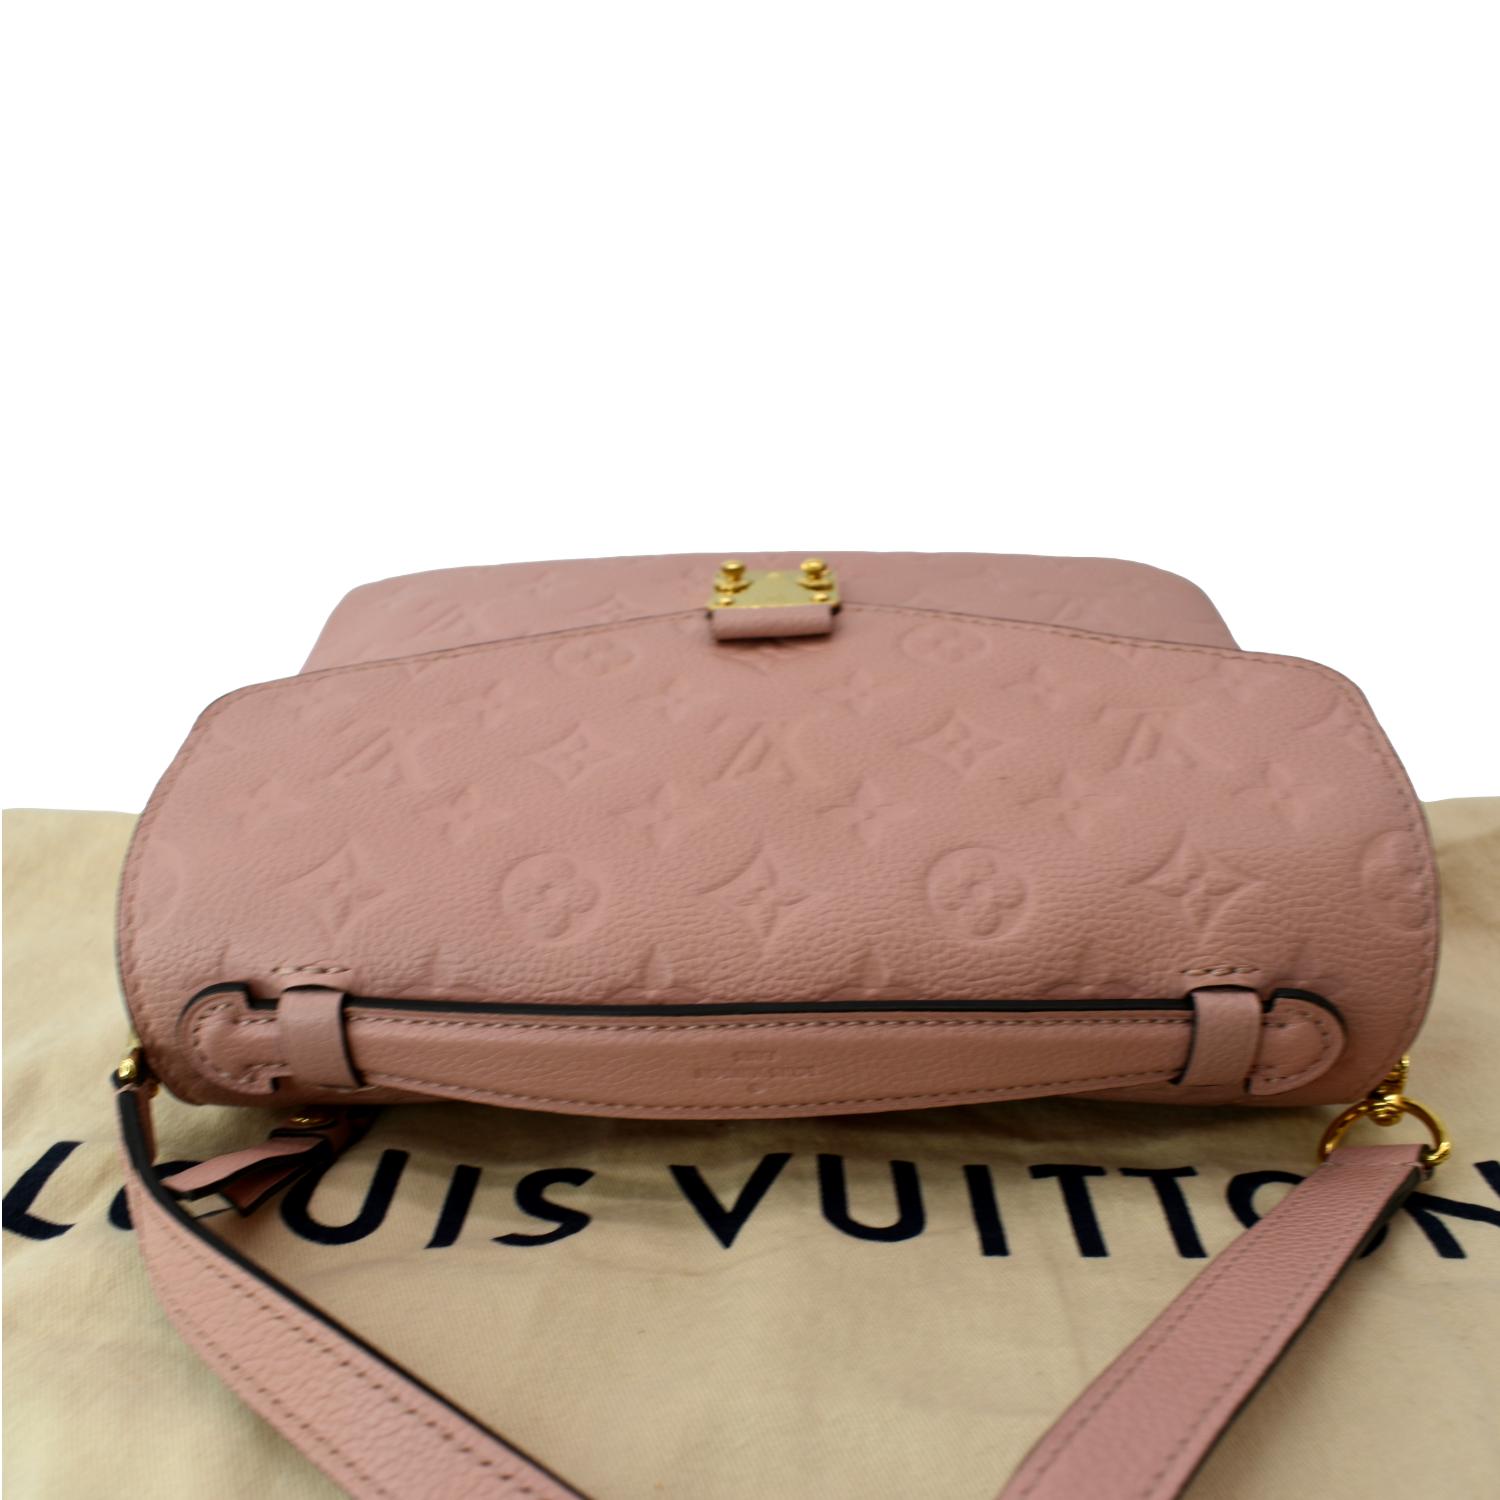 Louis Vuitton Empreinte Pochette Metis in Rose Pink Bag + FENDI Bag Bug  Review 